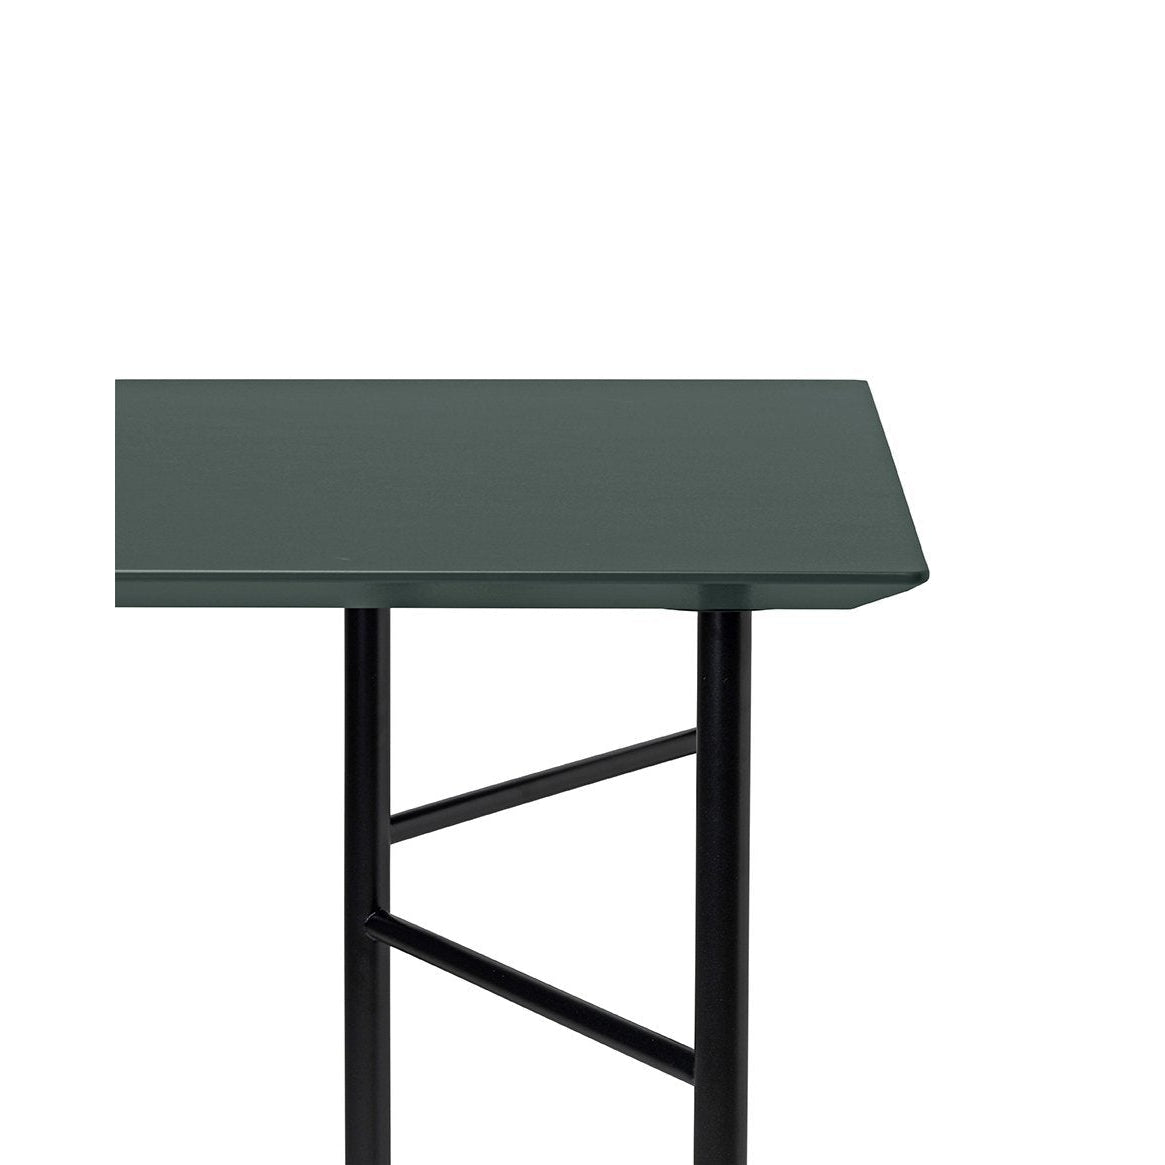 Ferm Living Mingle Desk Top, groen, 135 cm